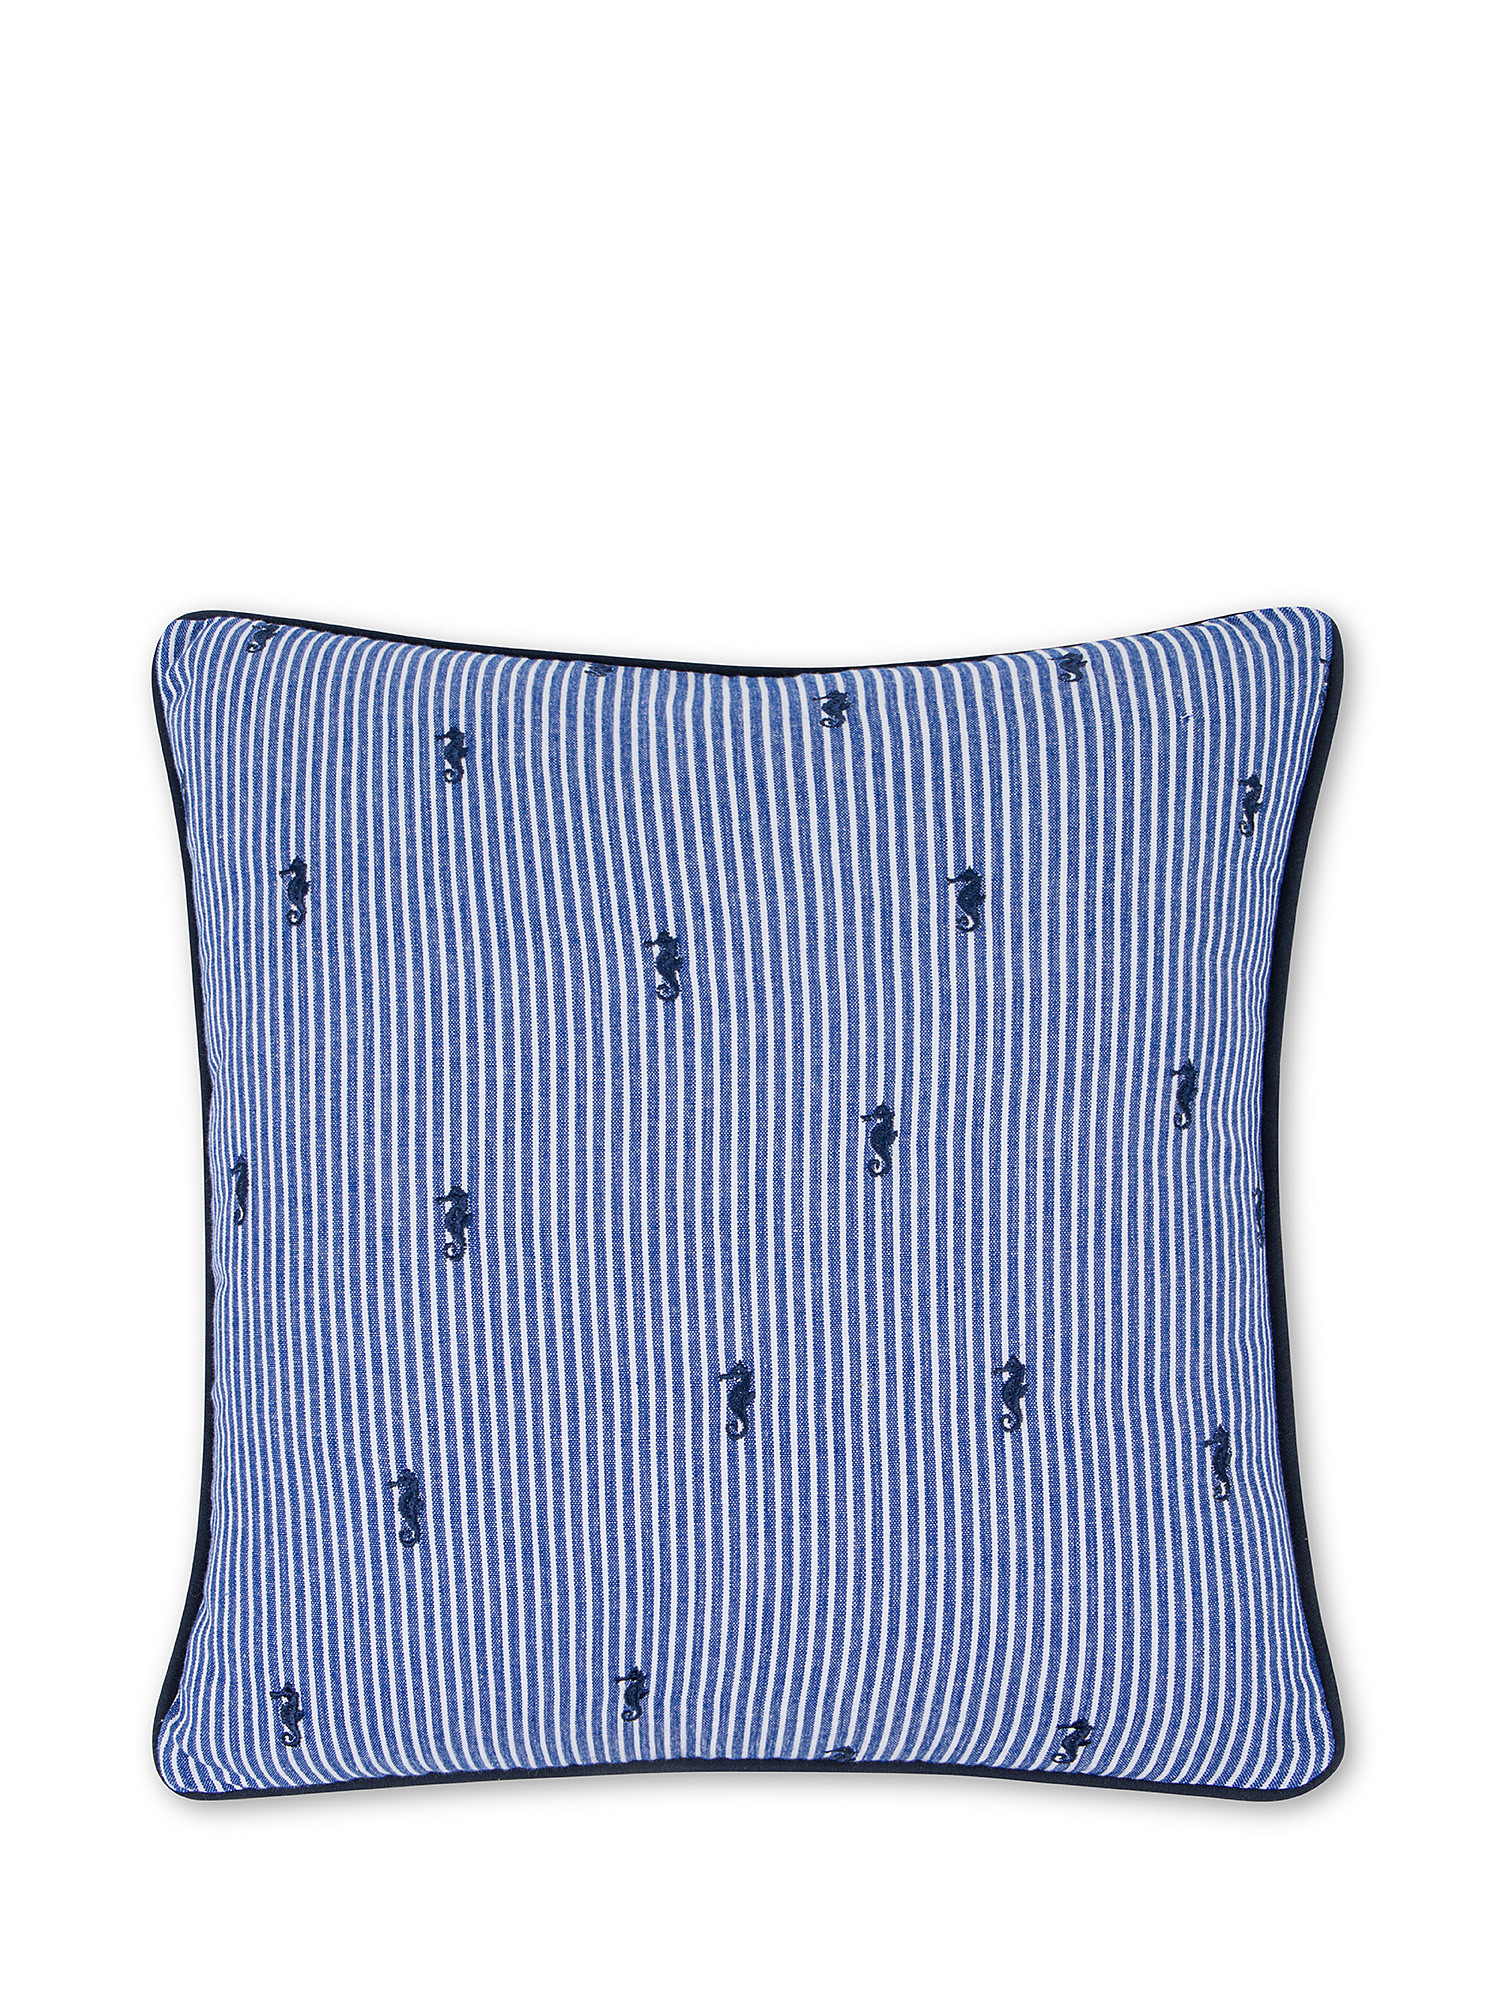 Cuscino 45x45 cm in cotone con ricami, Bianco/Blu, large image number 0